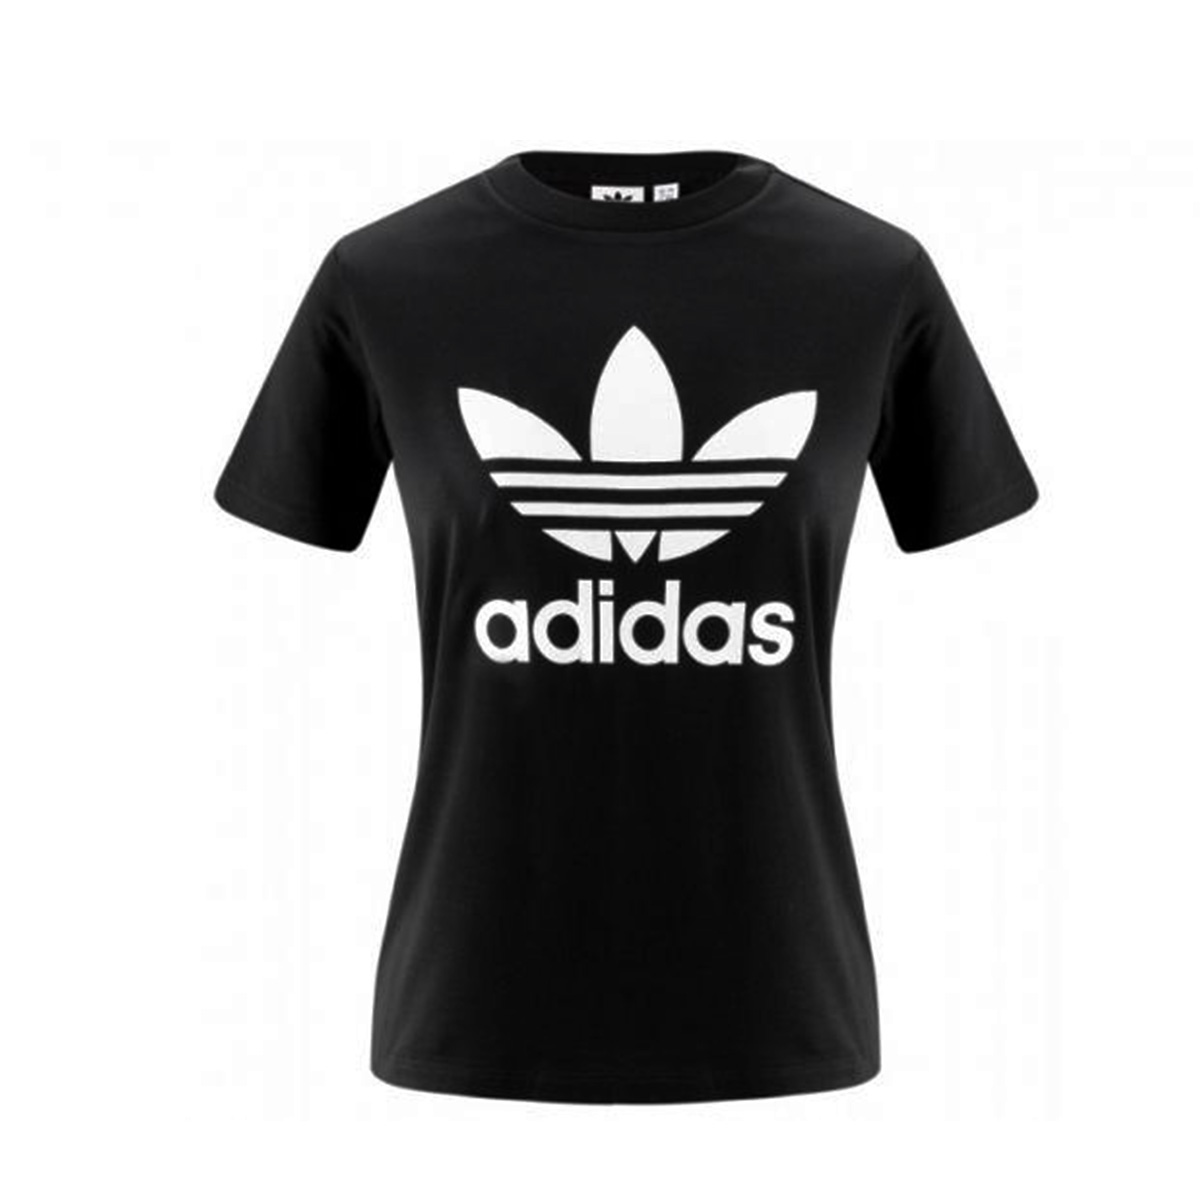 t-shirt femminile di Adidas-Nera con logo bianco- Trefoil- shop now online!